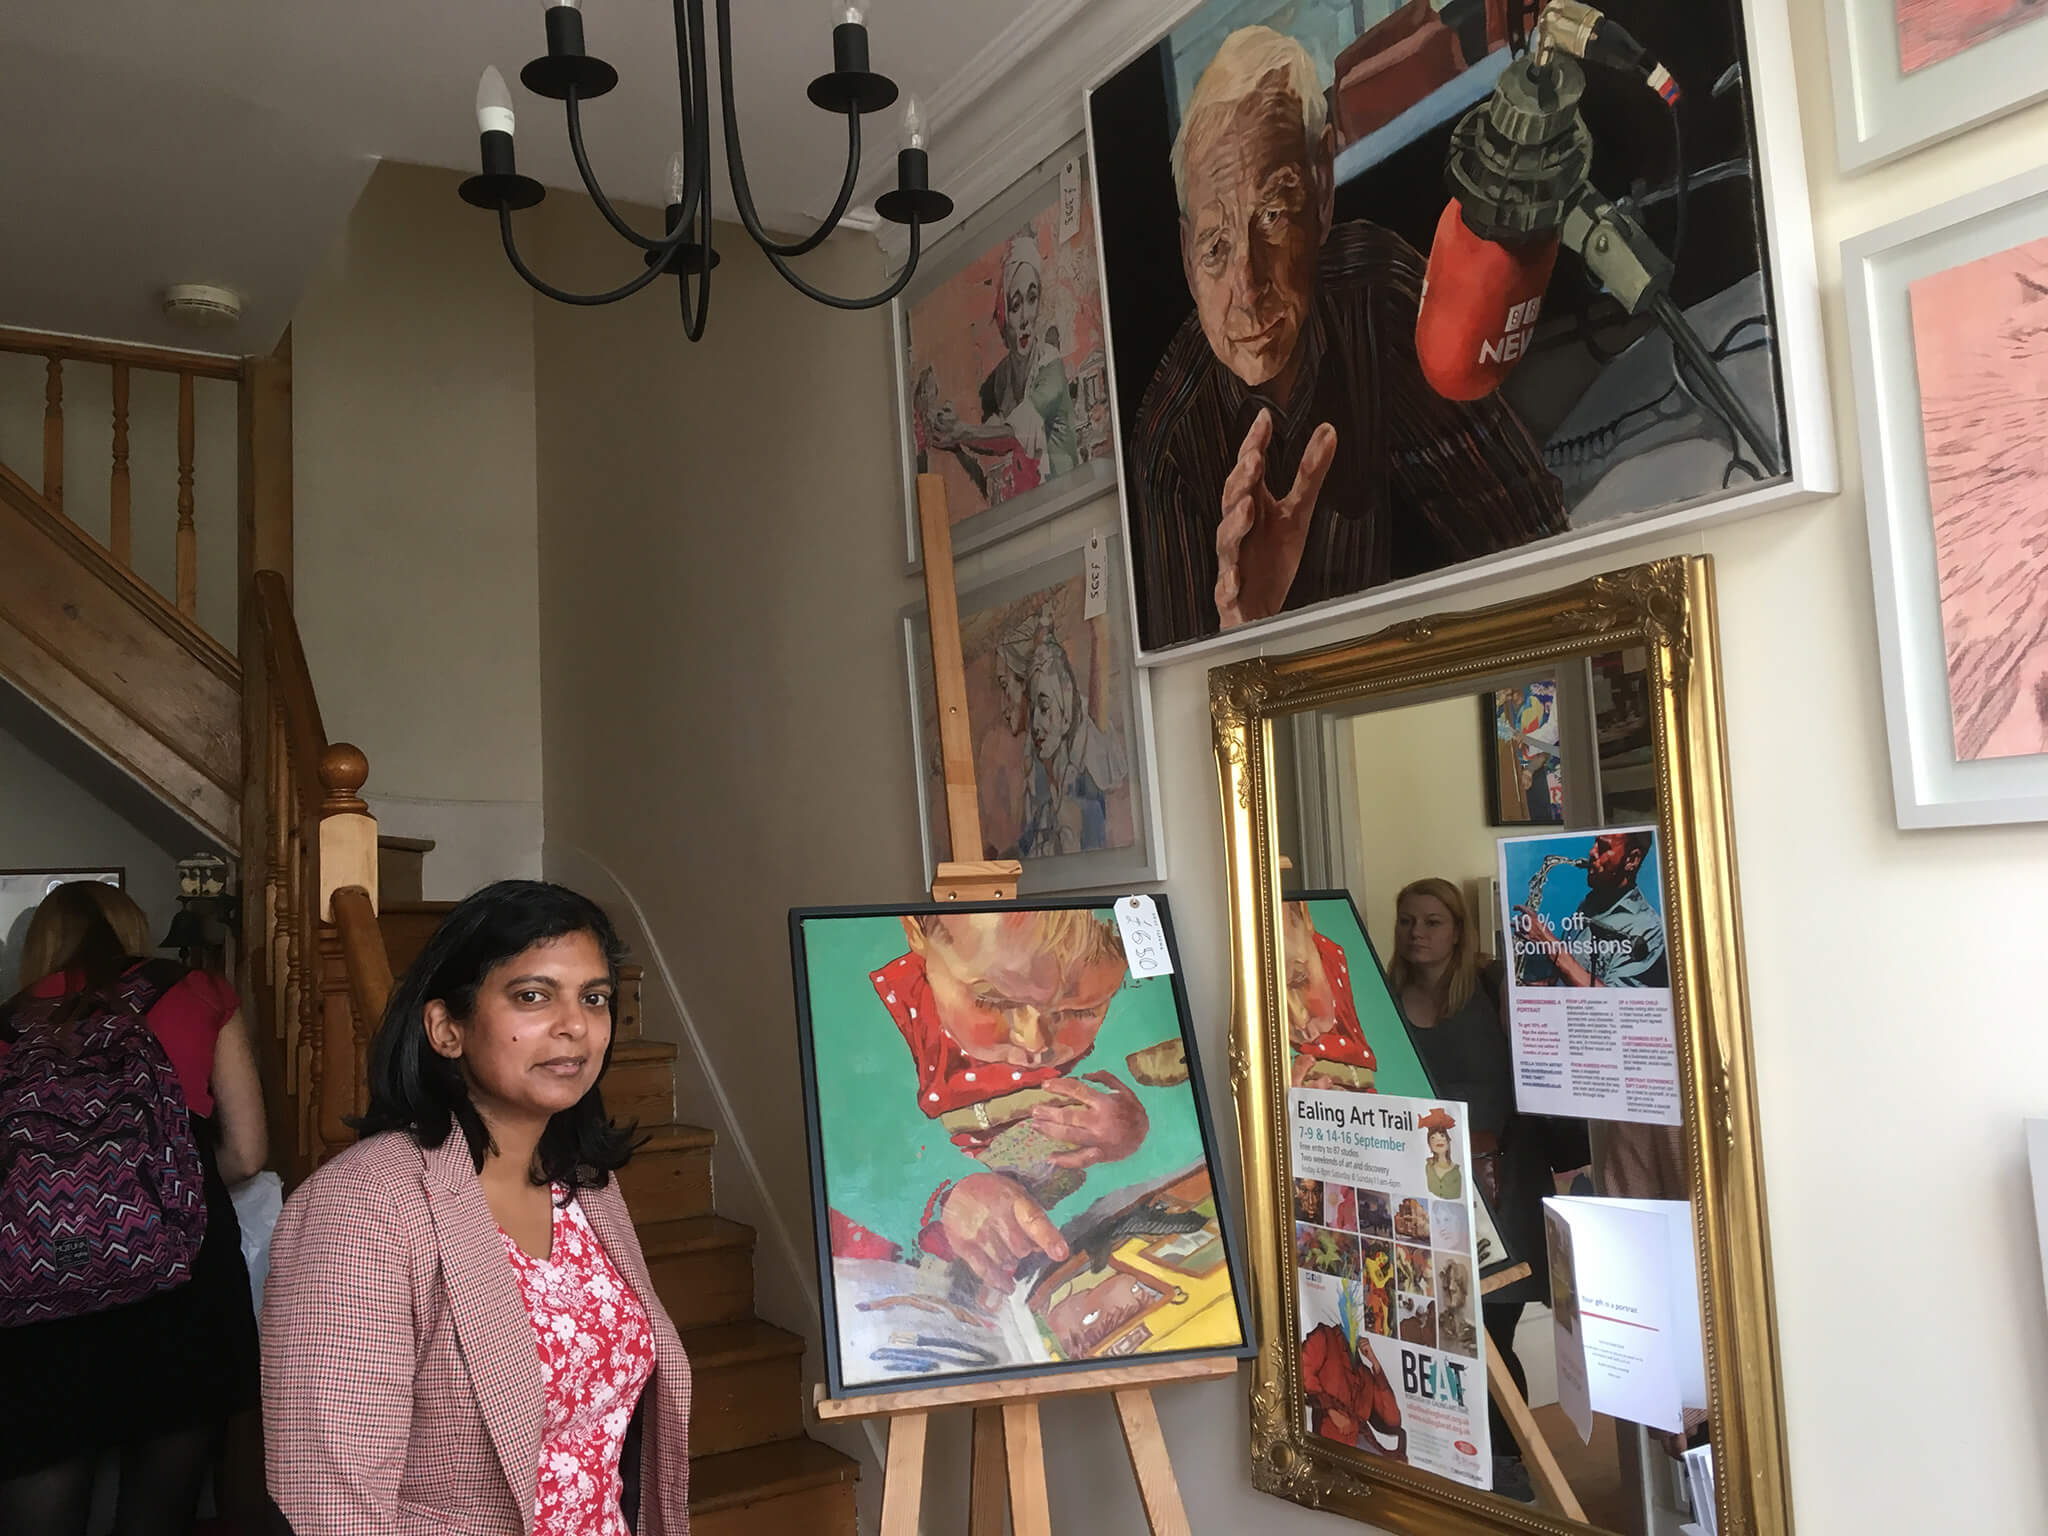 Ealing MP Rupa Huq visits Stella Tooth's open studio for BEAT Borough of Ealing Art Trail 2018.